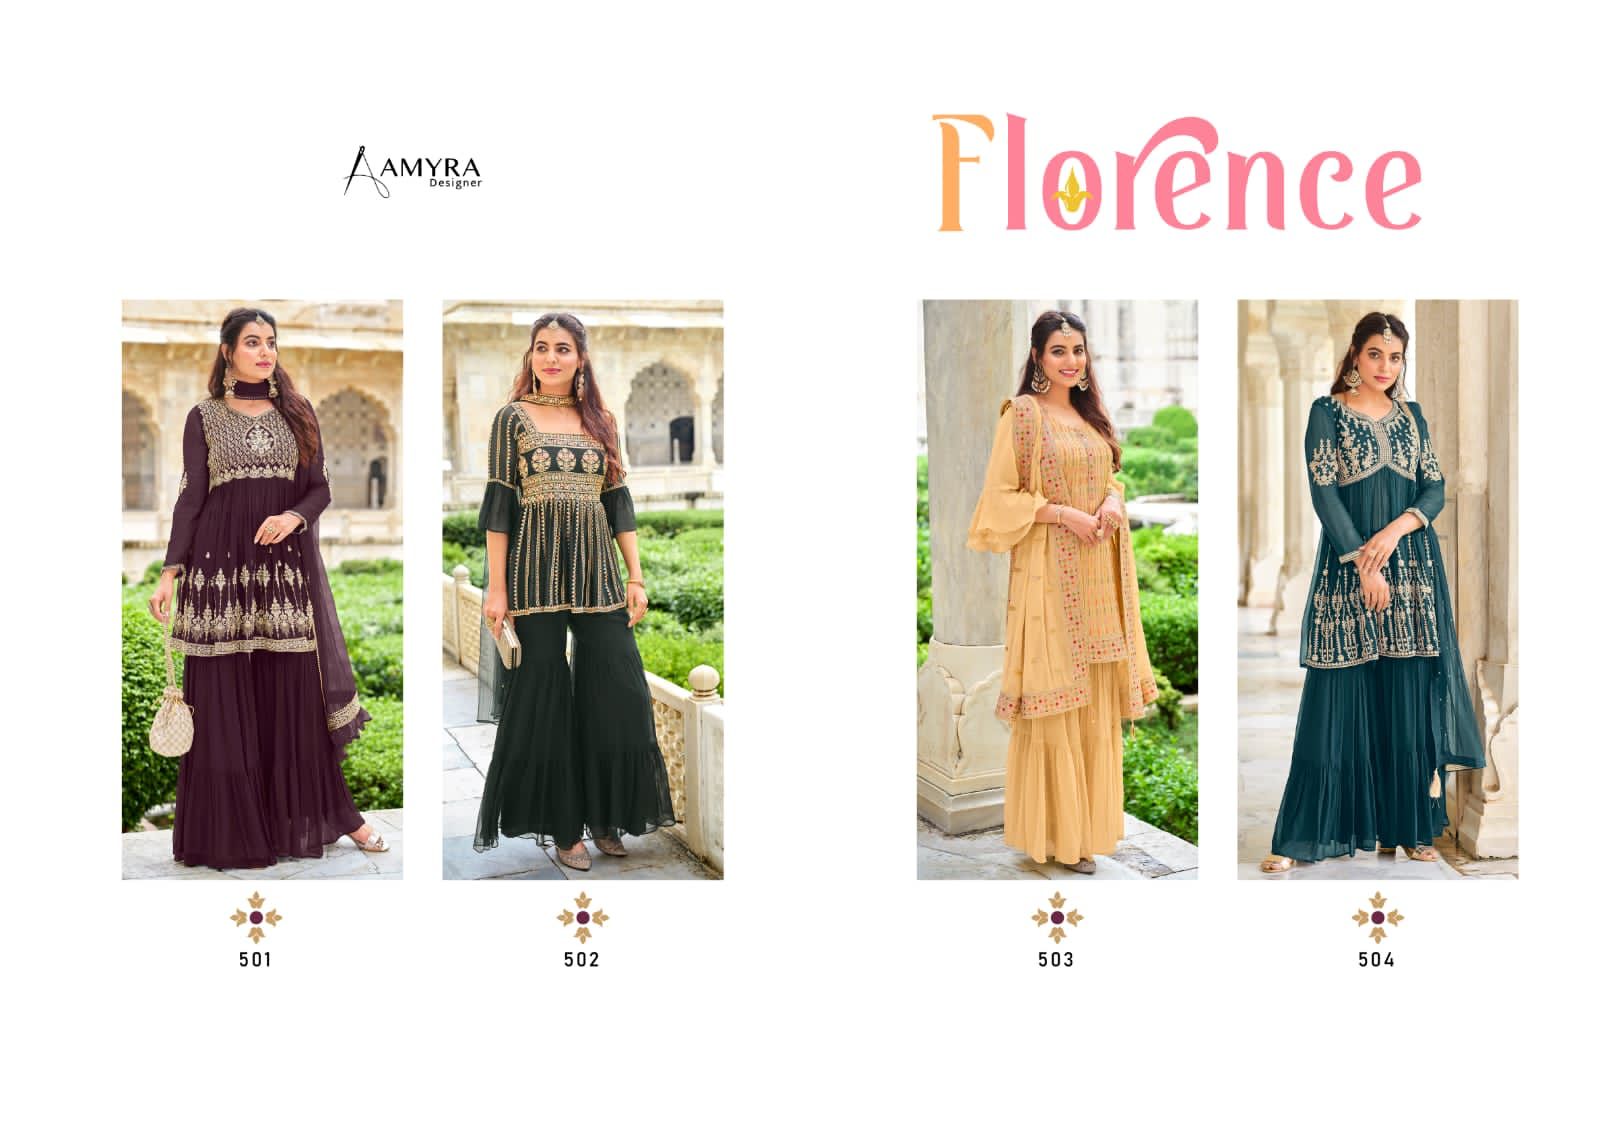 Amyra Designer Florence New 501-504